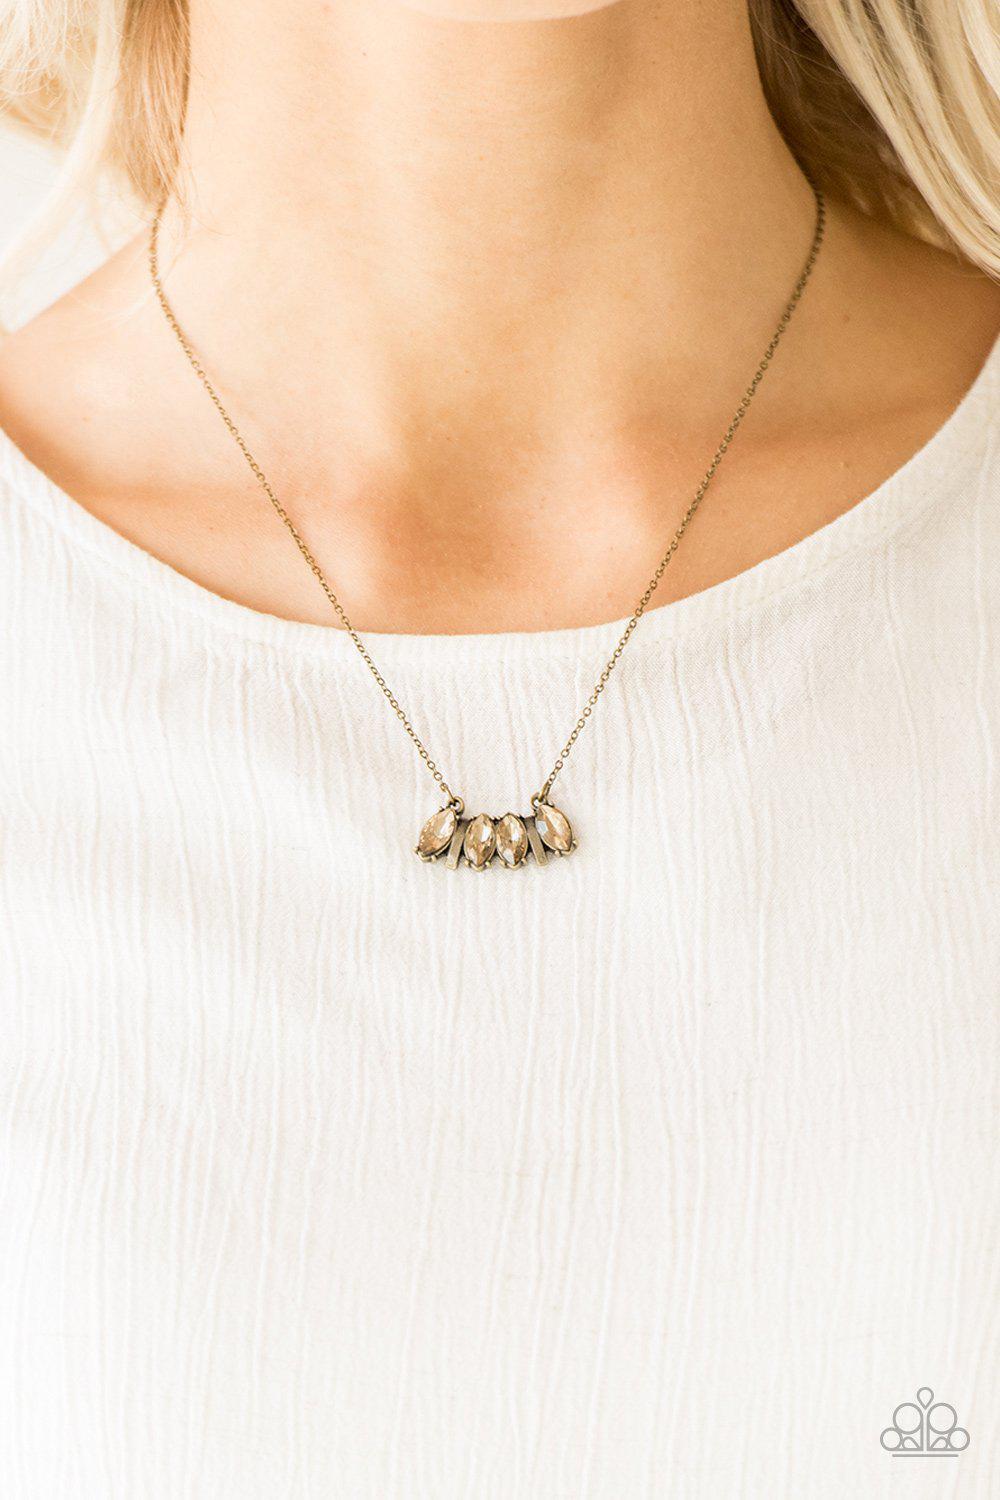 Deco Decadence Brass Necklace - Paparazzi Accessories- model - CarasShop.com - $5 Jewelry by Cara Jewels